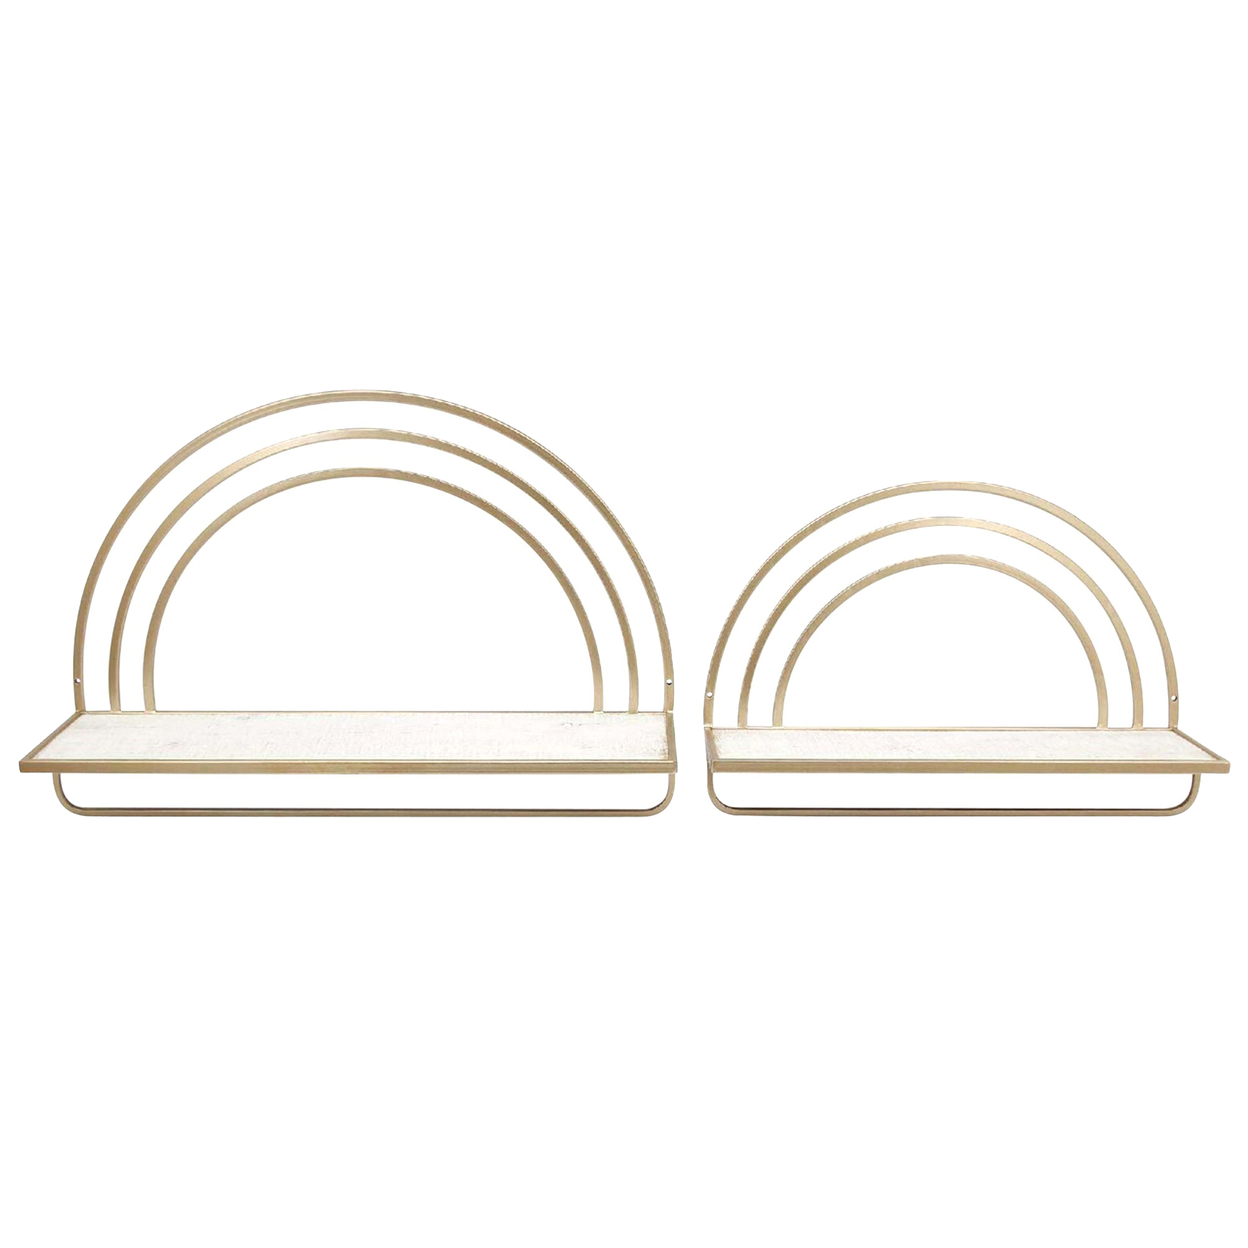 Xod 20 Inch Shelves, Set Of 2, Rainbow Arch, Metal Frame, Gold And White -Saltoro Sherpi